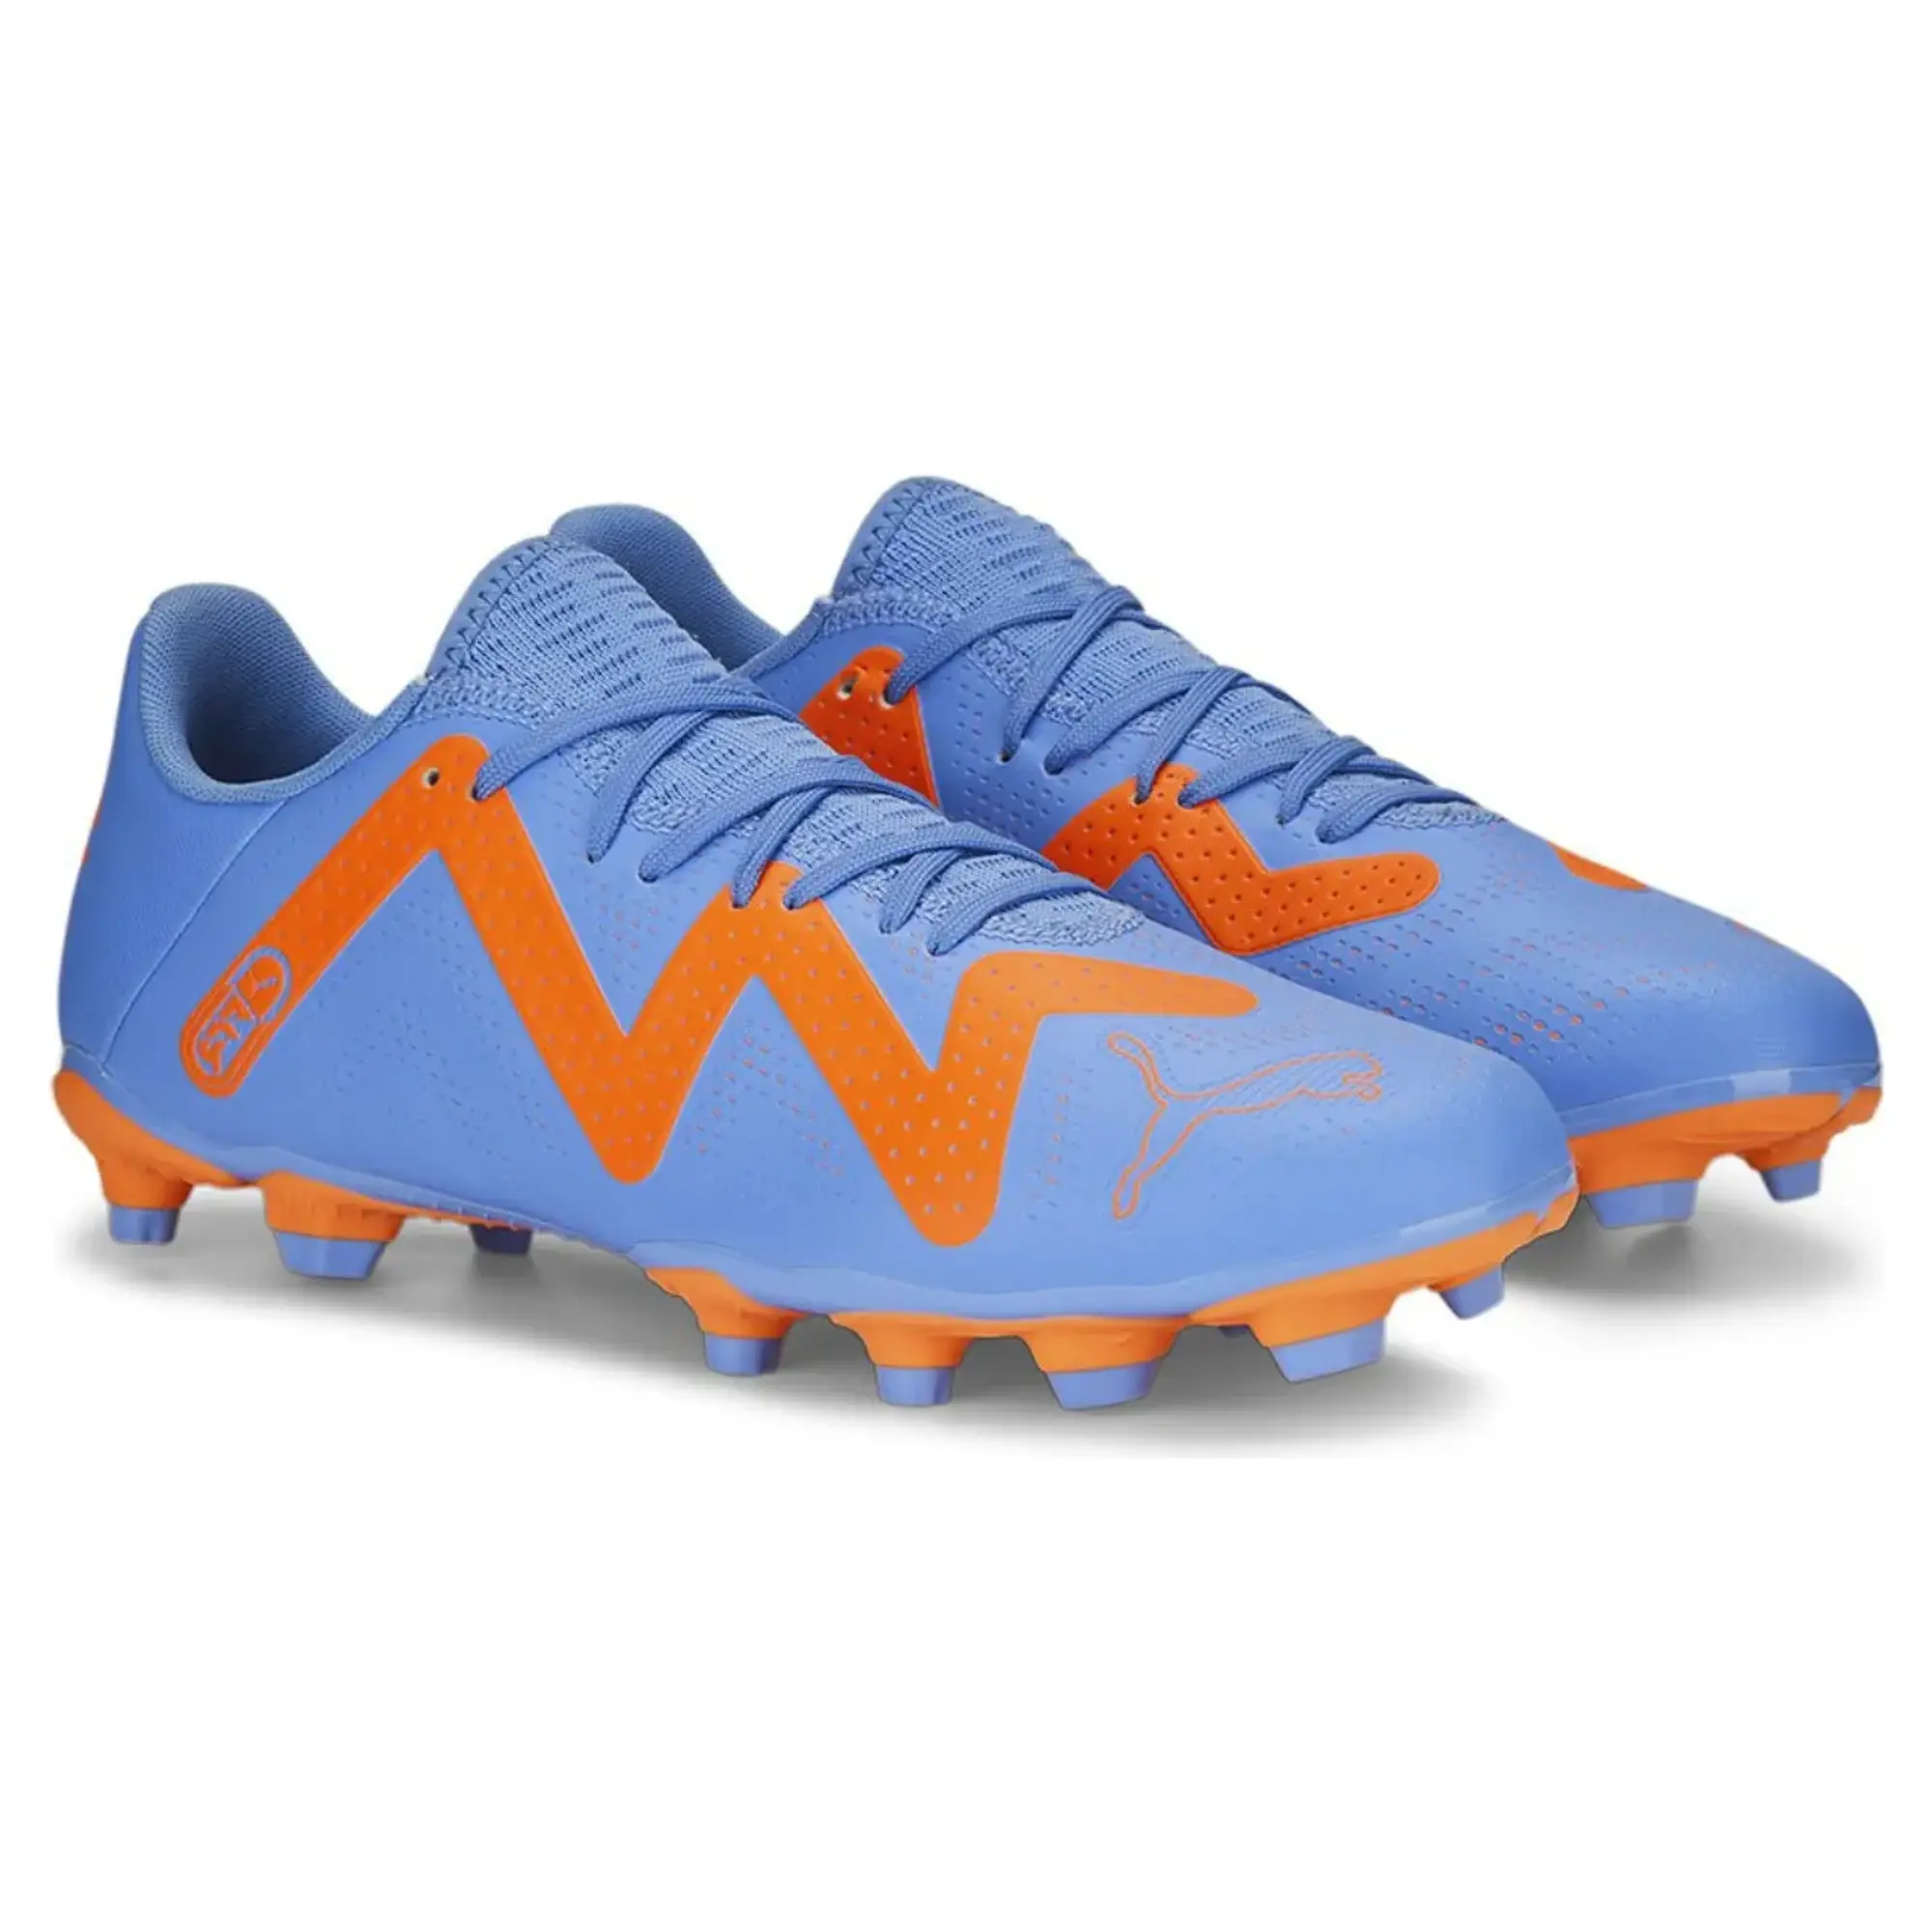 Puma Future.4 Firm Ground Football Boots Mens